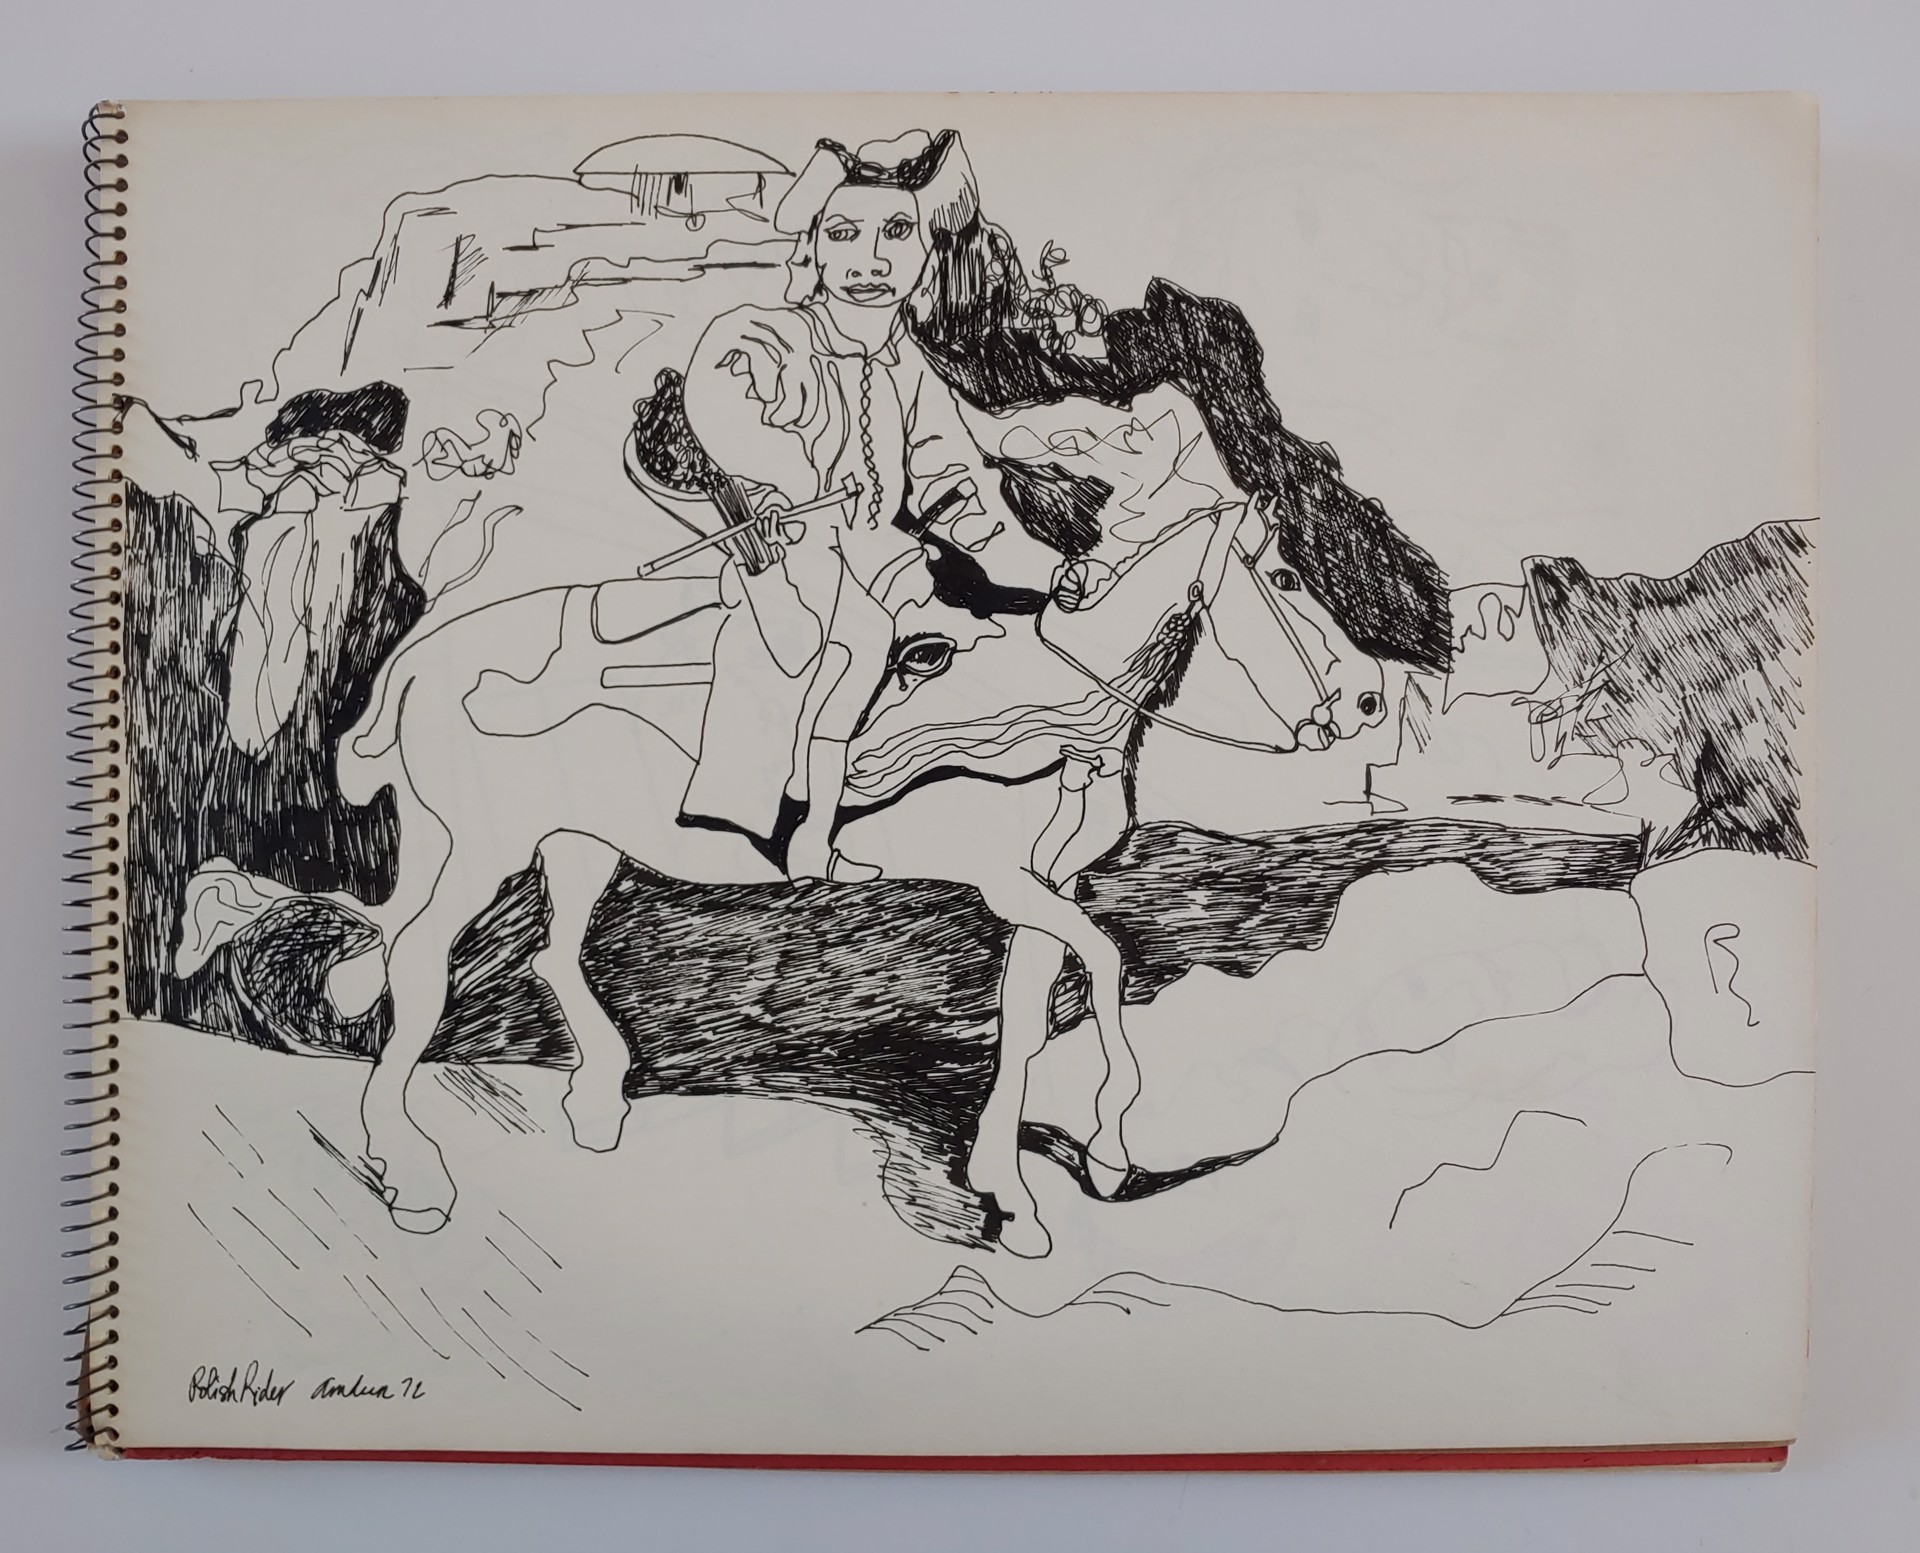 February 1972 Sketchbook by David Amdur